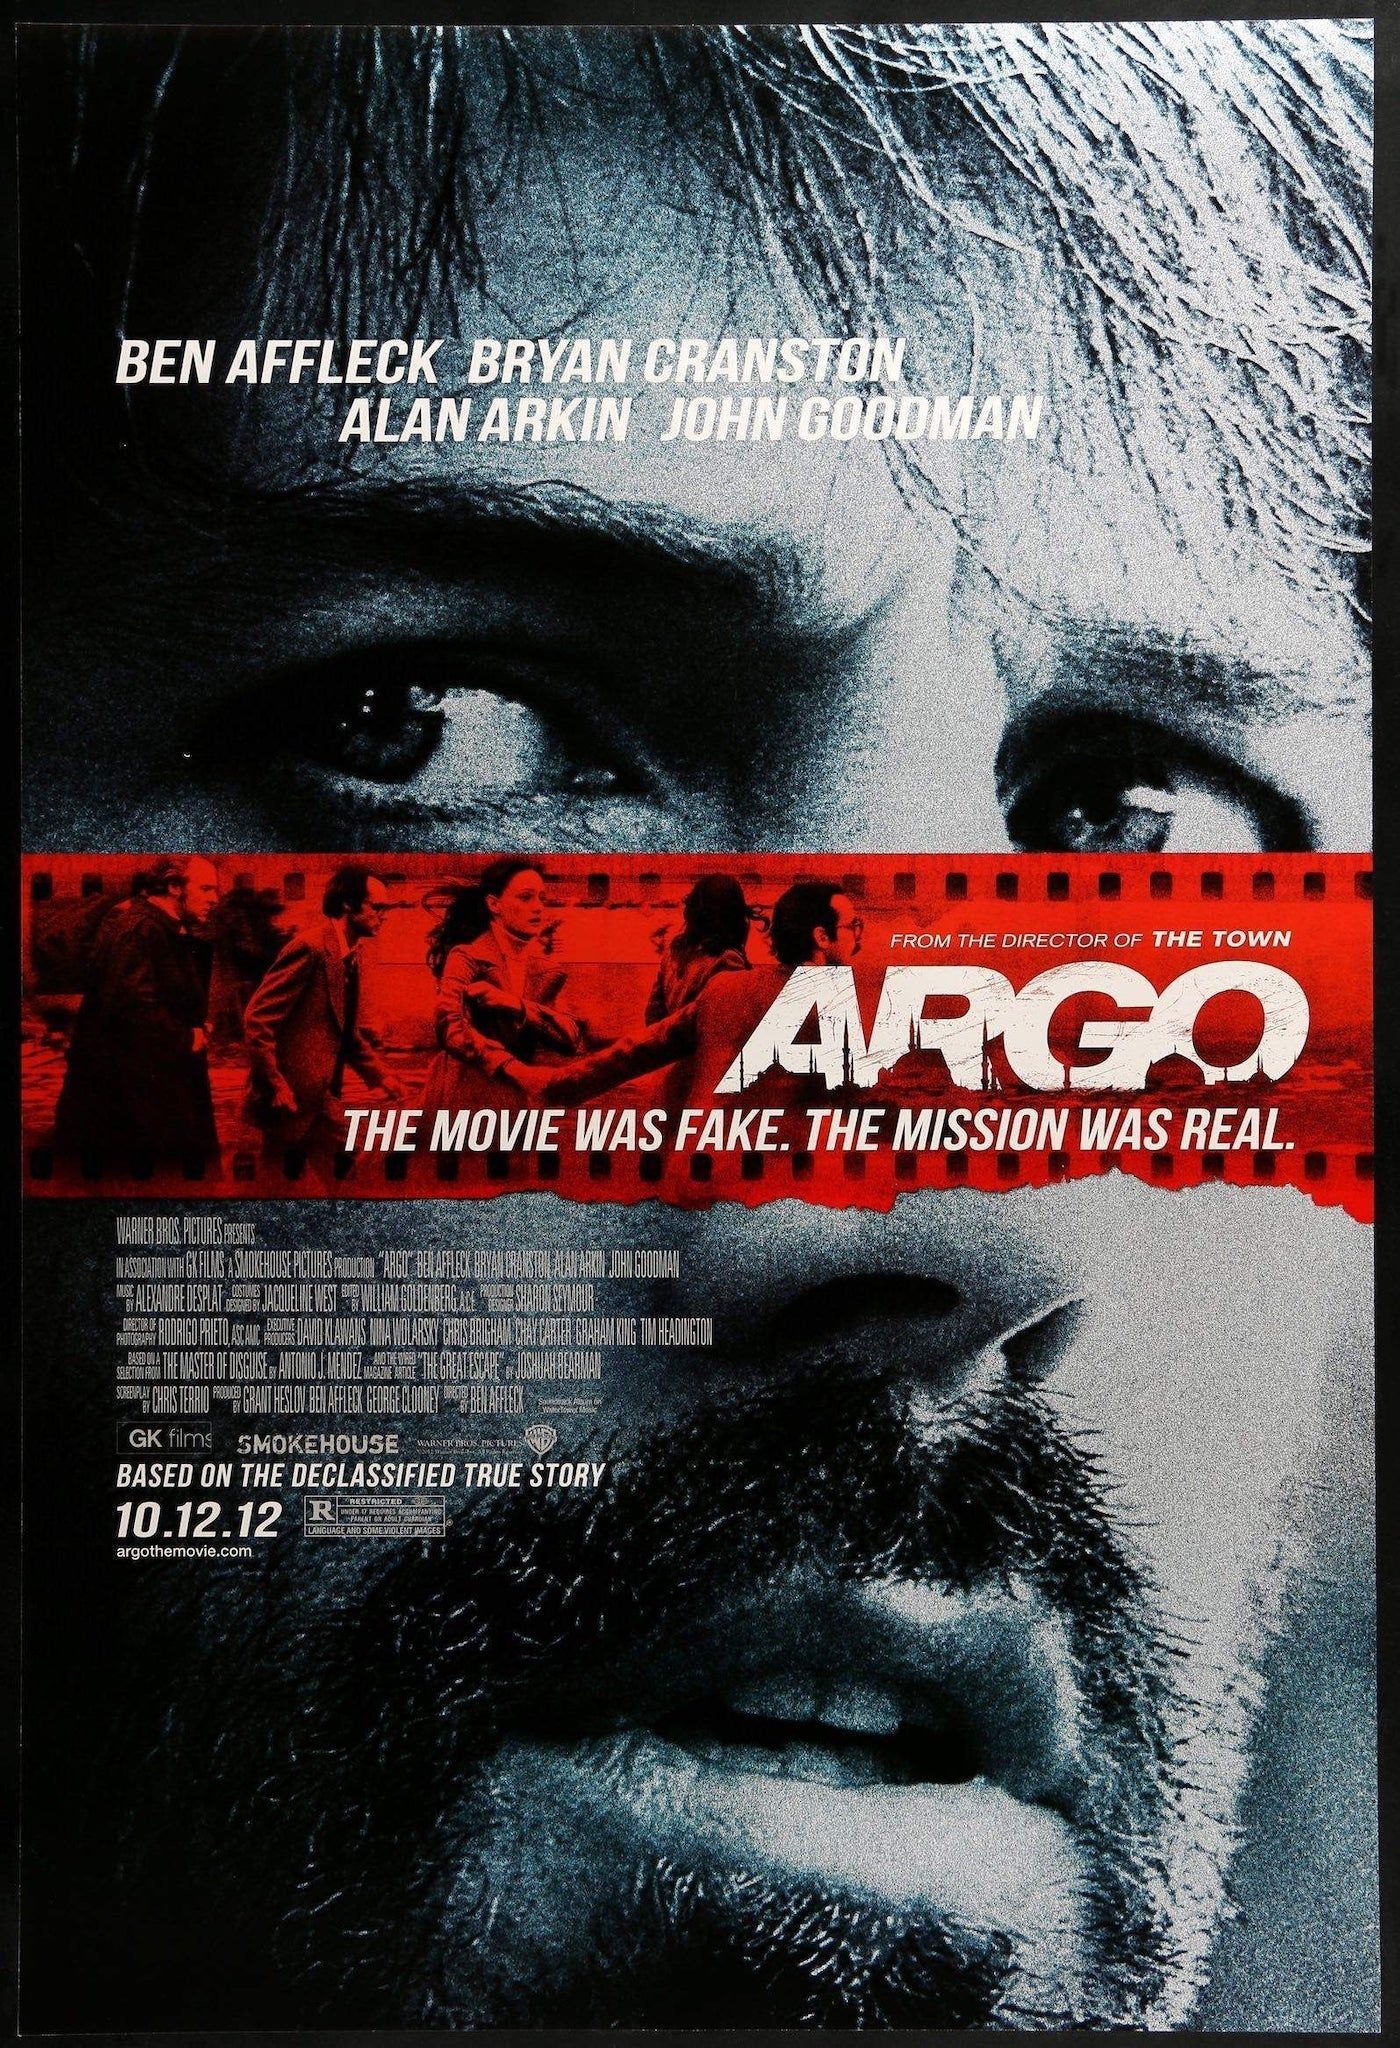 Argo movie poster featuring Ben Affleck